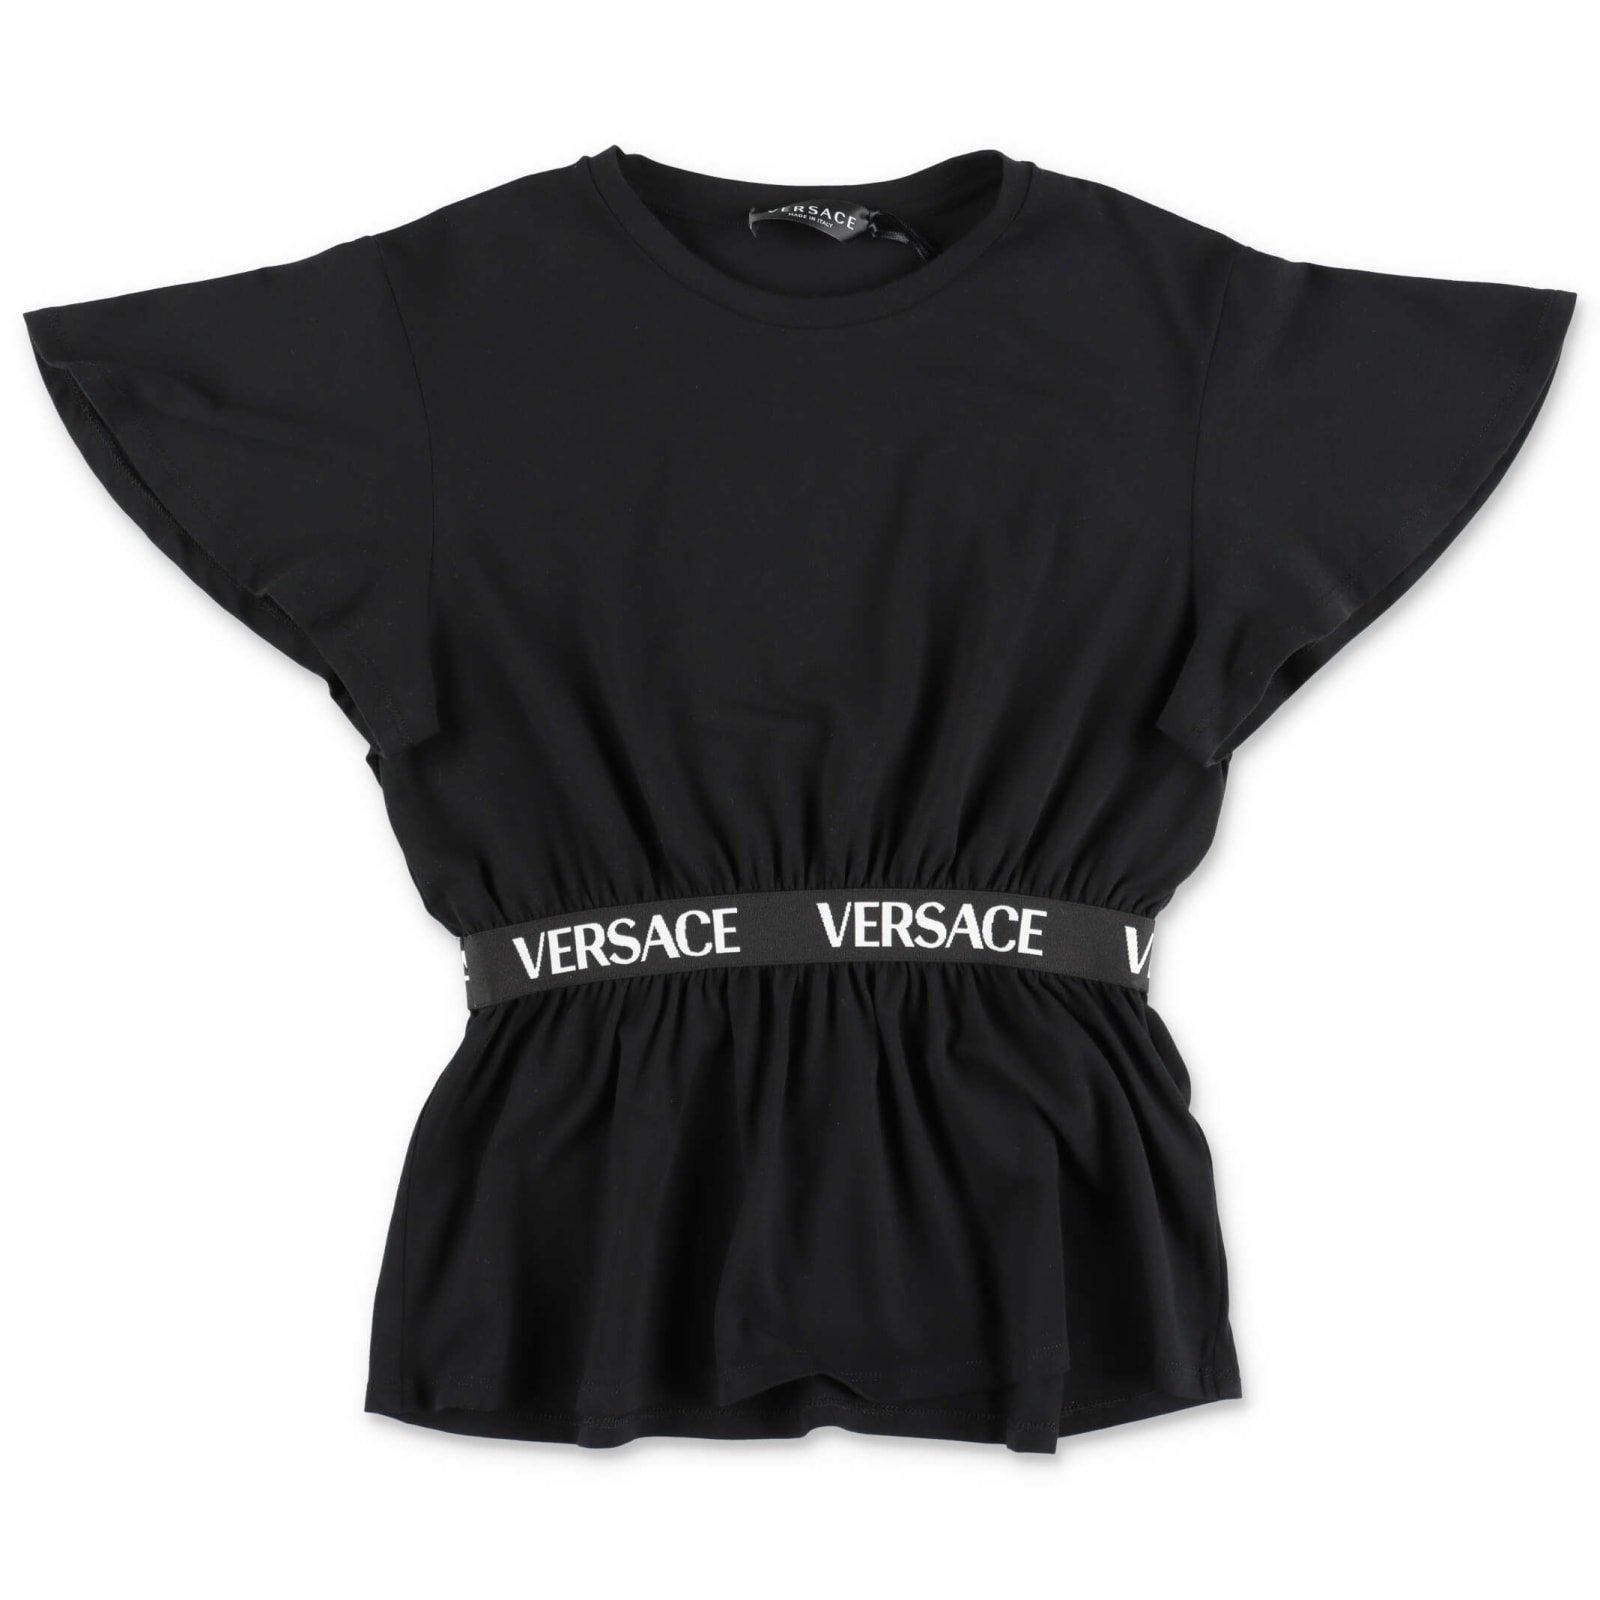 Versace T-shirt Nera Peplum In Jersey Di Cotone